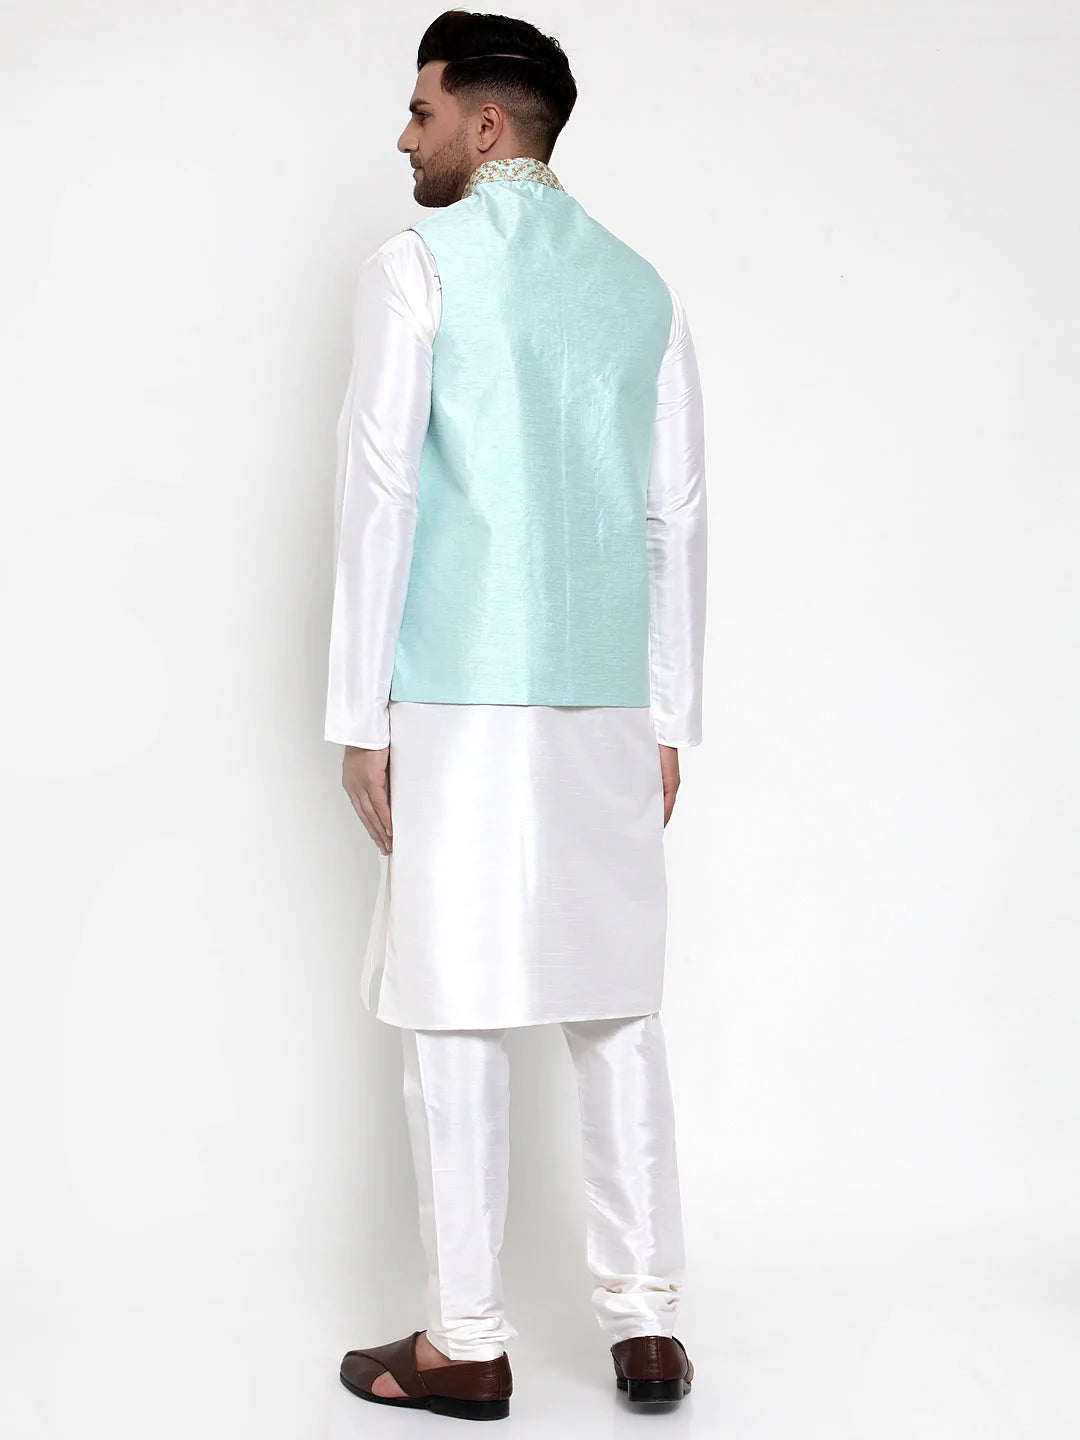 Jompers Men's Solid Dupion Kurta Pajama with Embroidered Nehru Jacket ( JOKPWC OW-D 4016Sky )